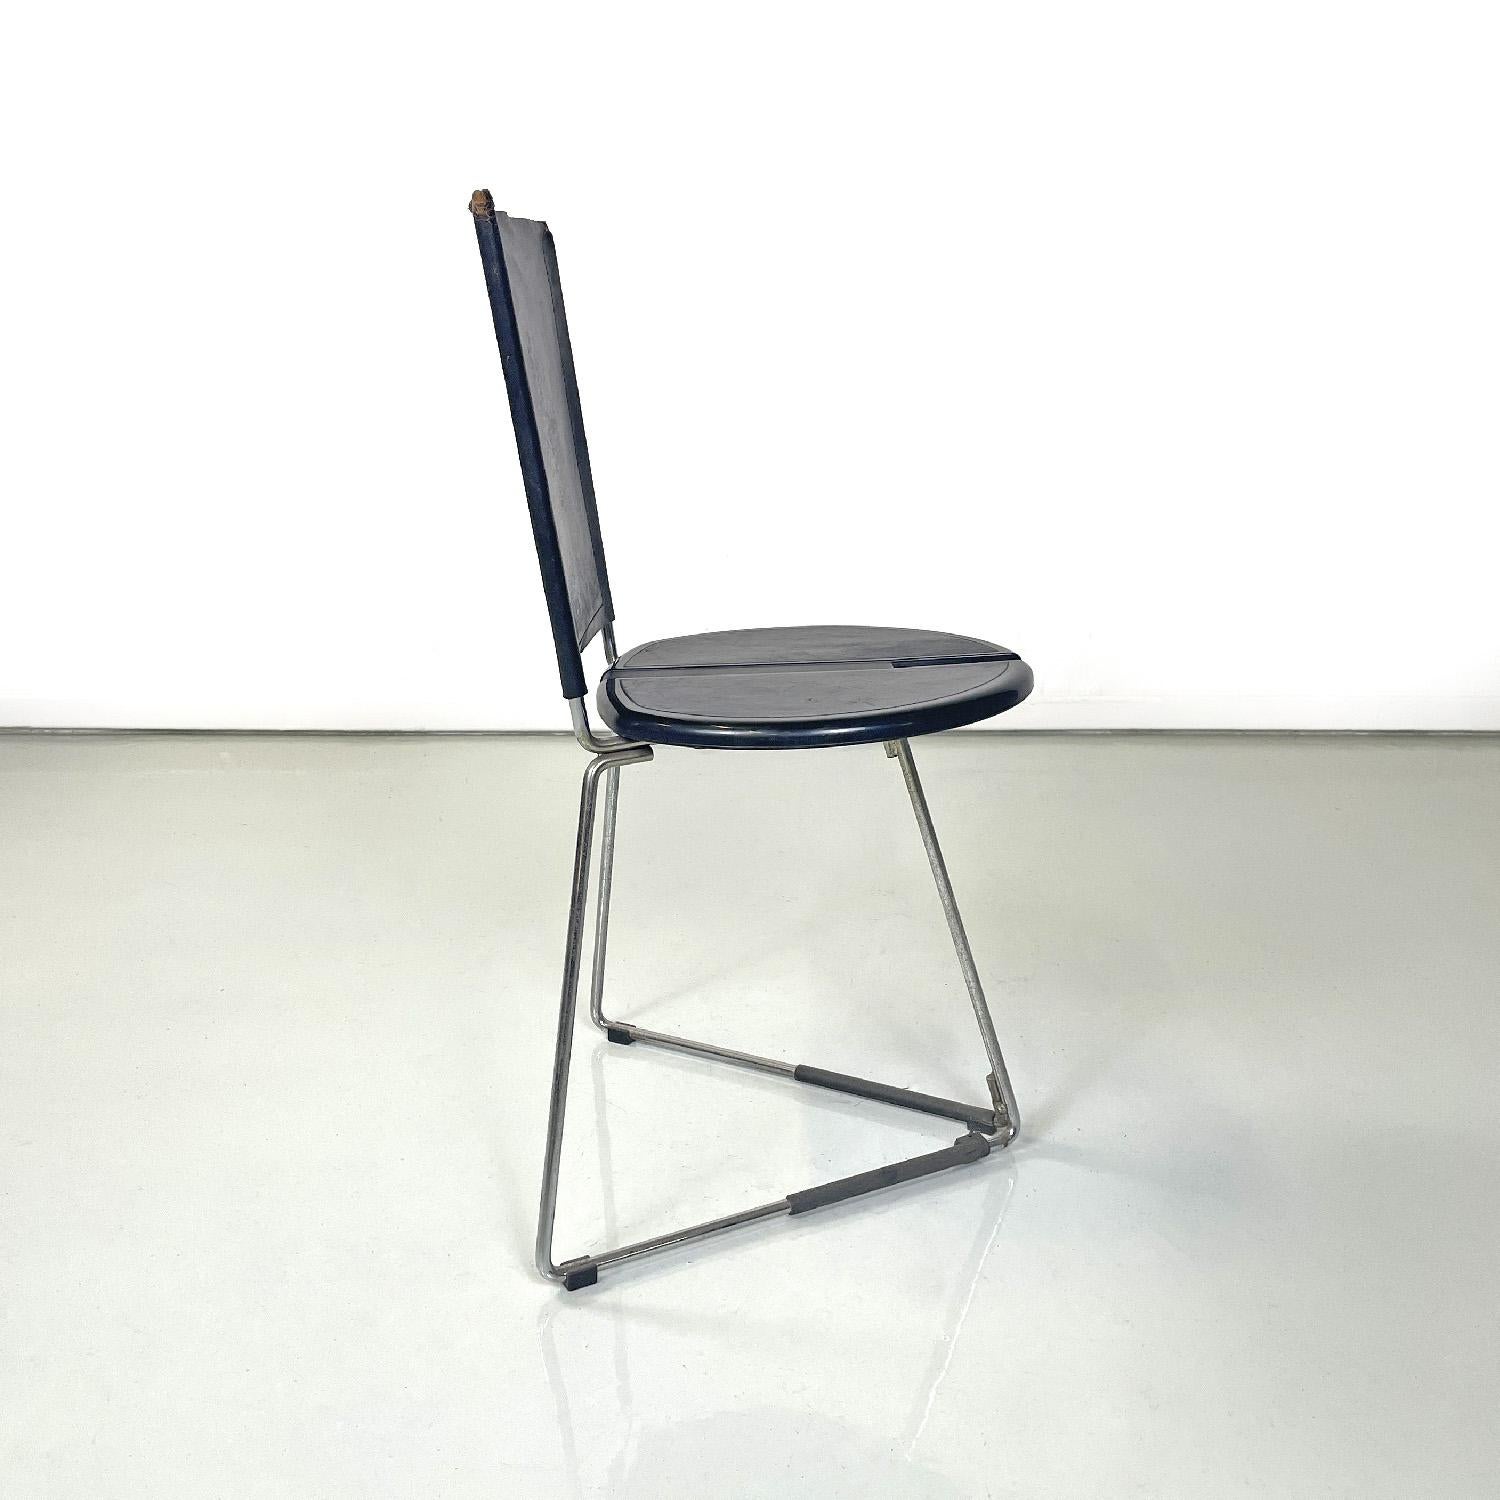 Italian modern black chair Terna by Gaspare Cairoli for Seccose, 1980s In Fair Condition For Sale In MIlano, IT